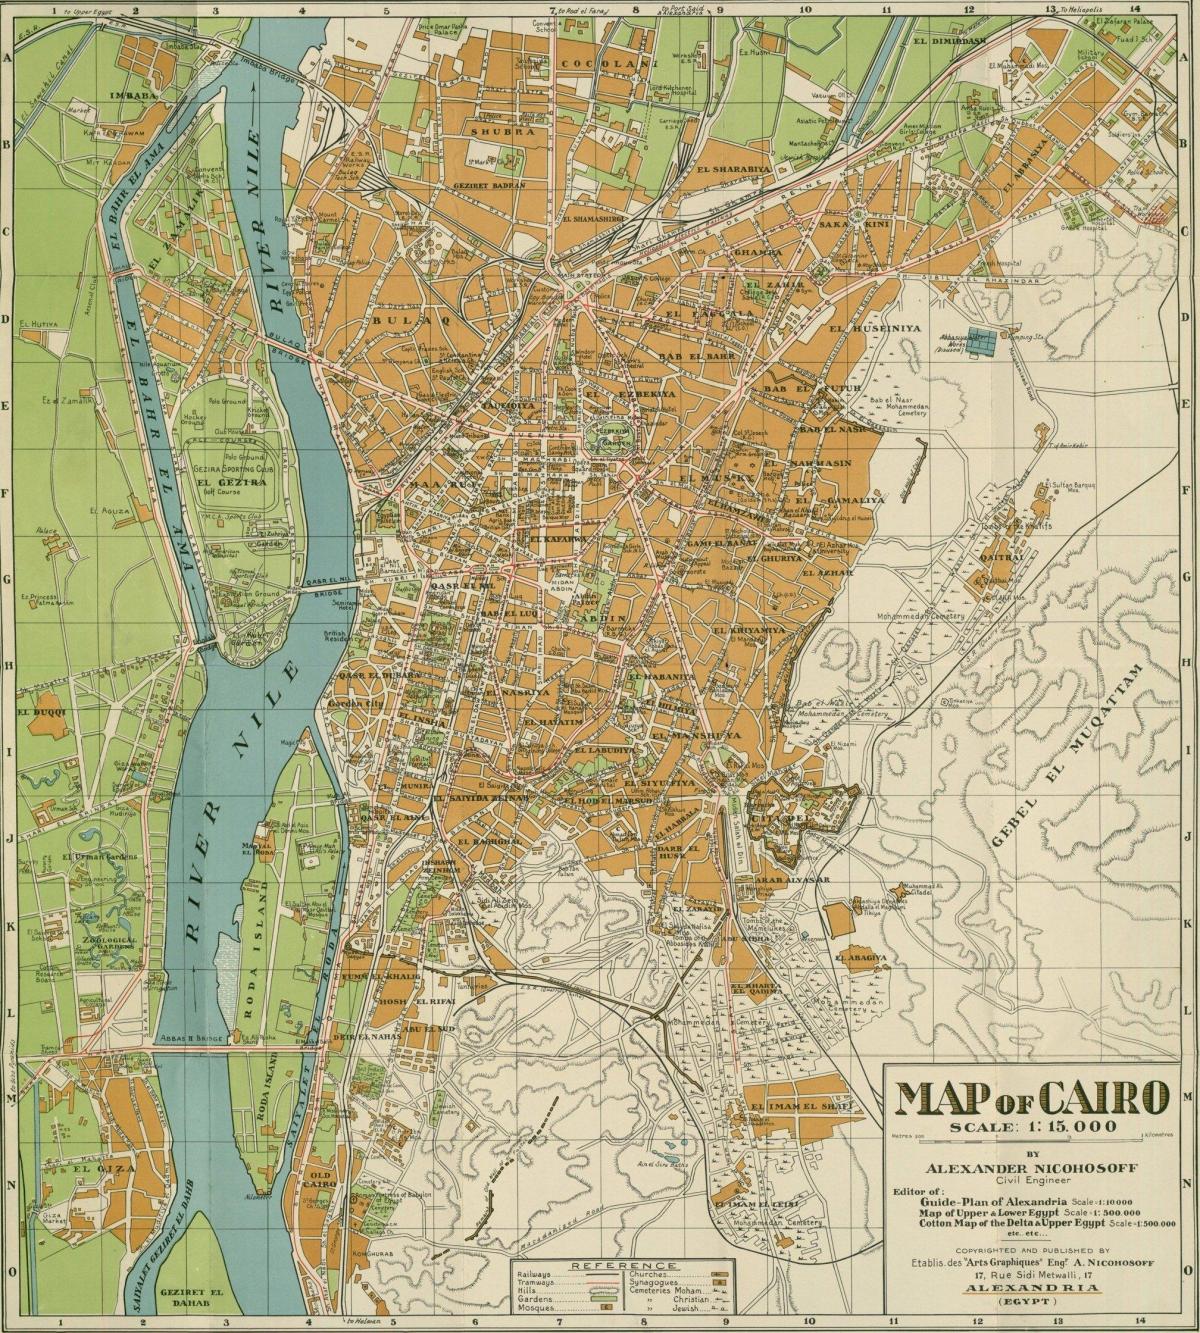 Cairo historical map